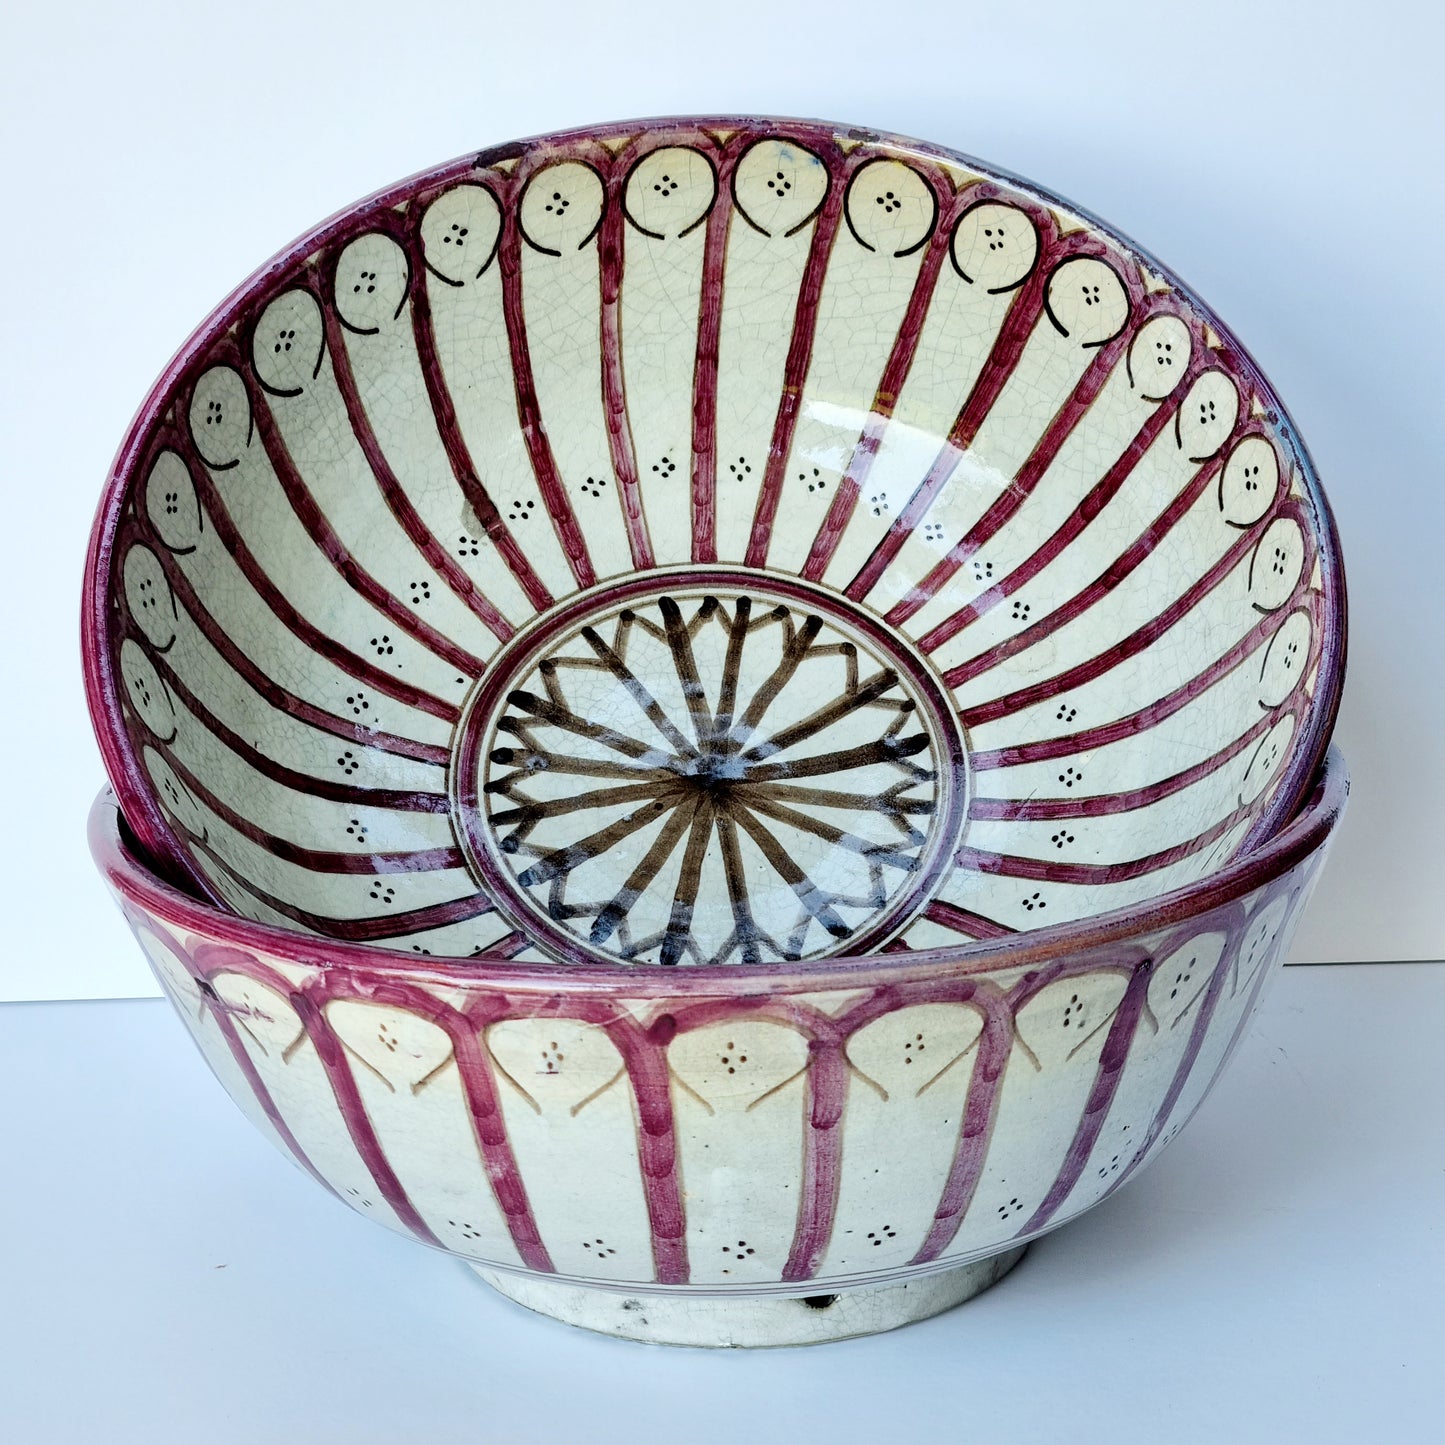 Dos cuencos de cerámica artesanal